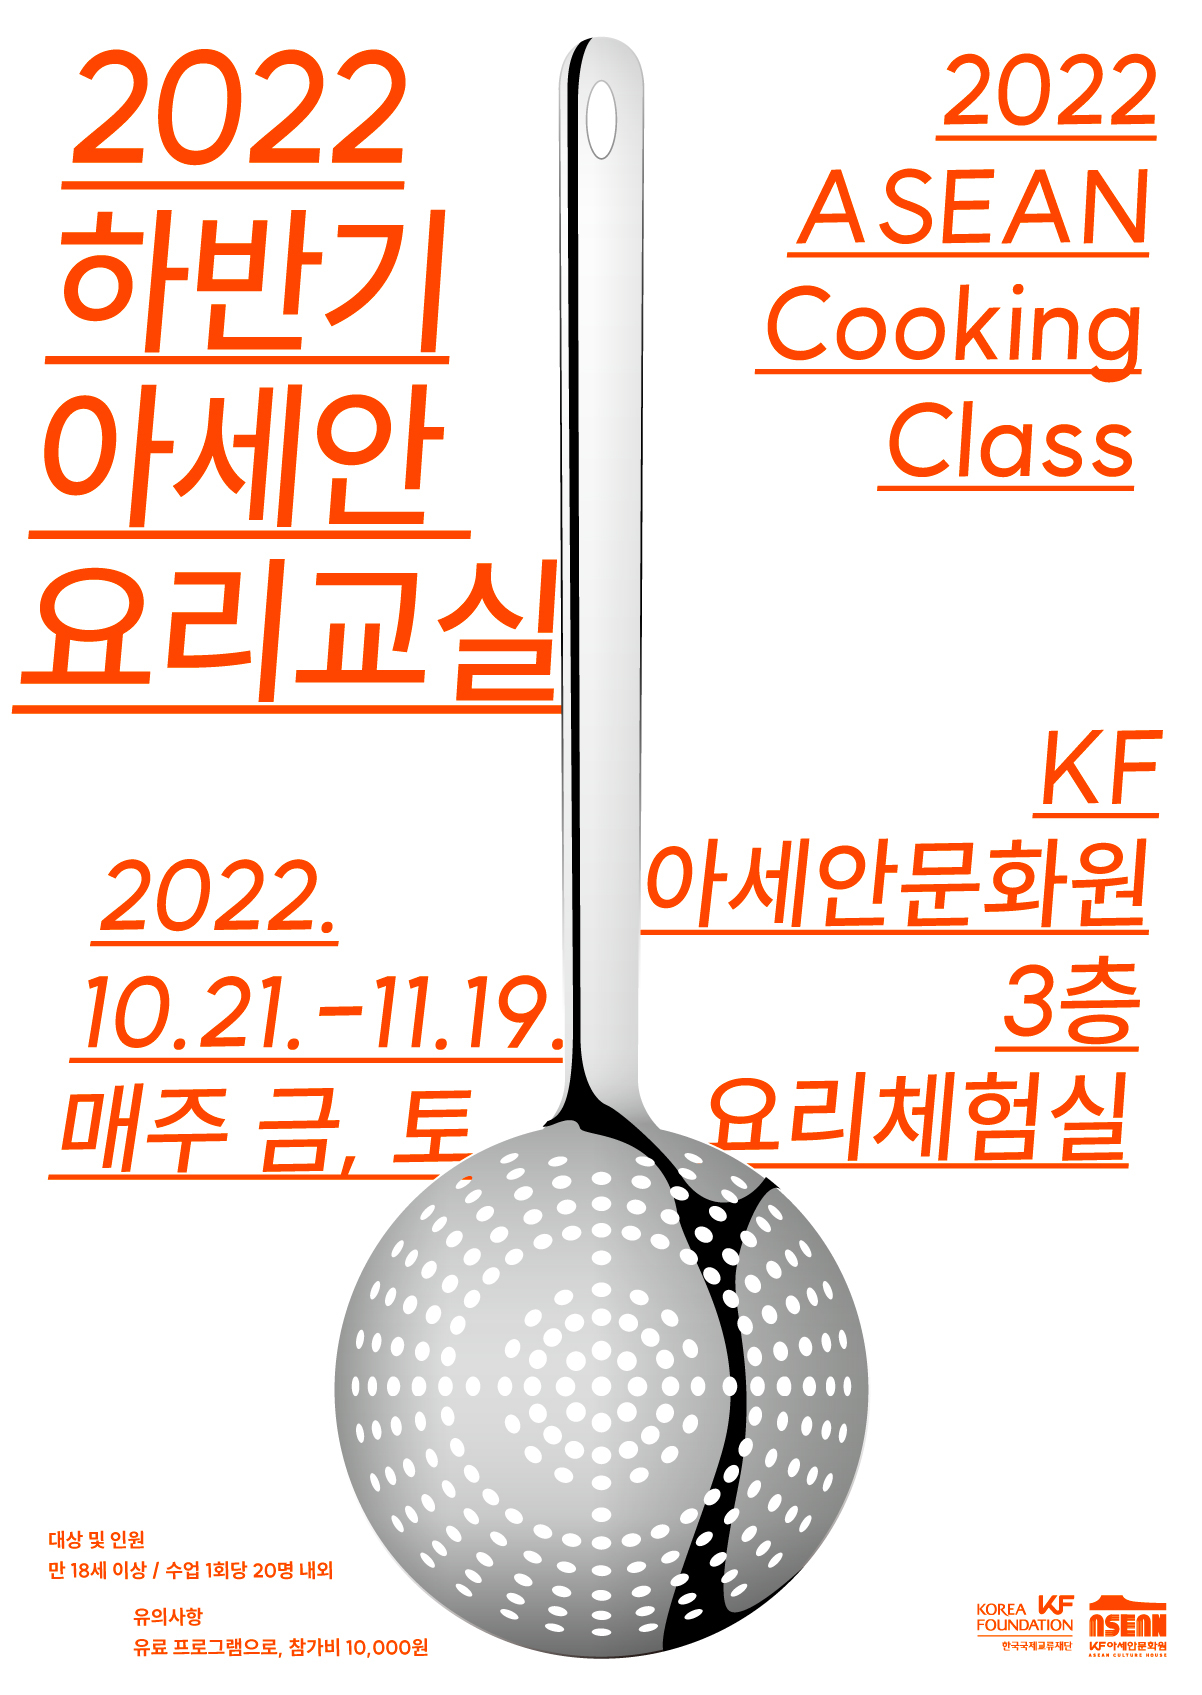 [KF아세안문화원] 2022년 하반기 아세안 요리교실